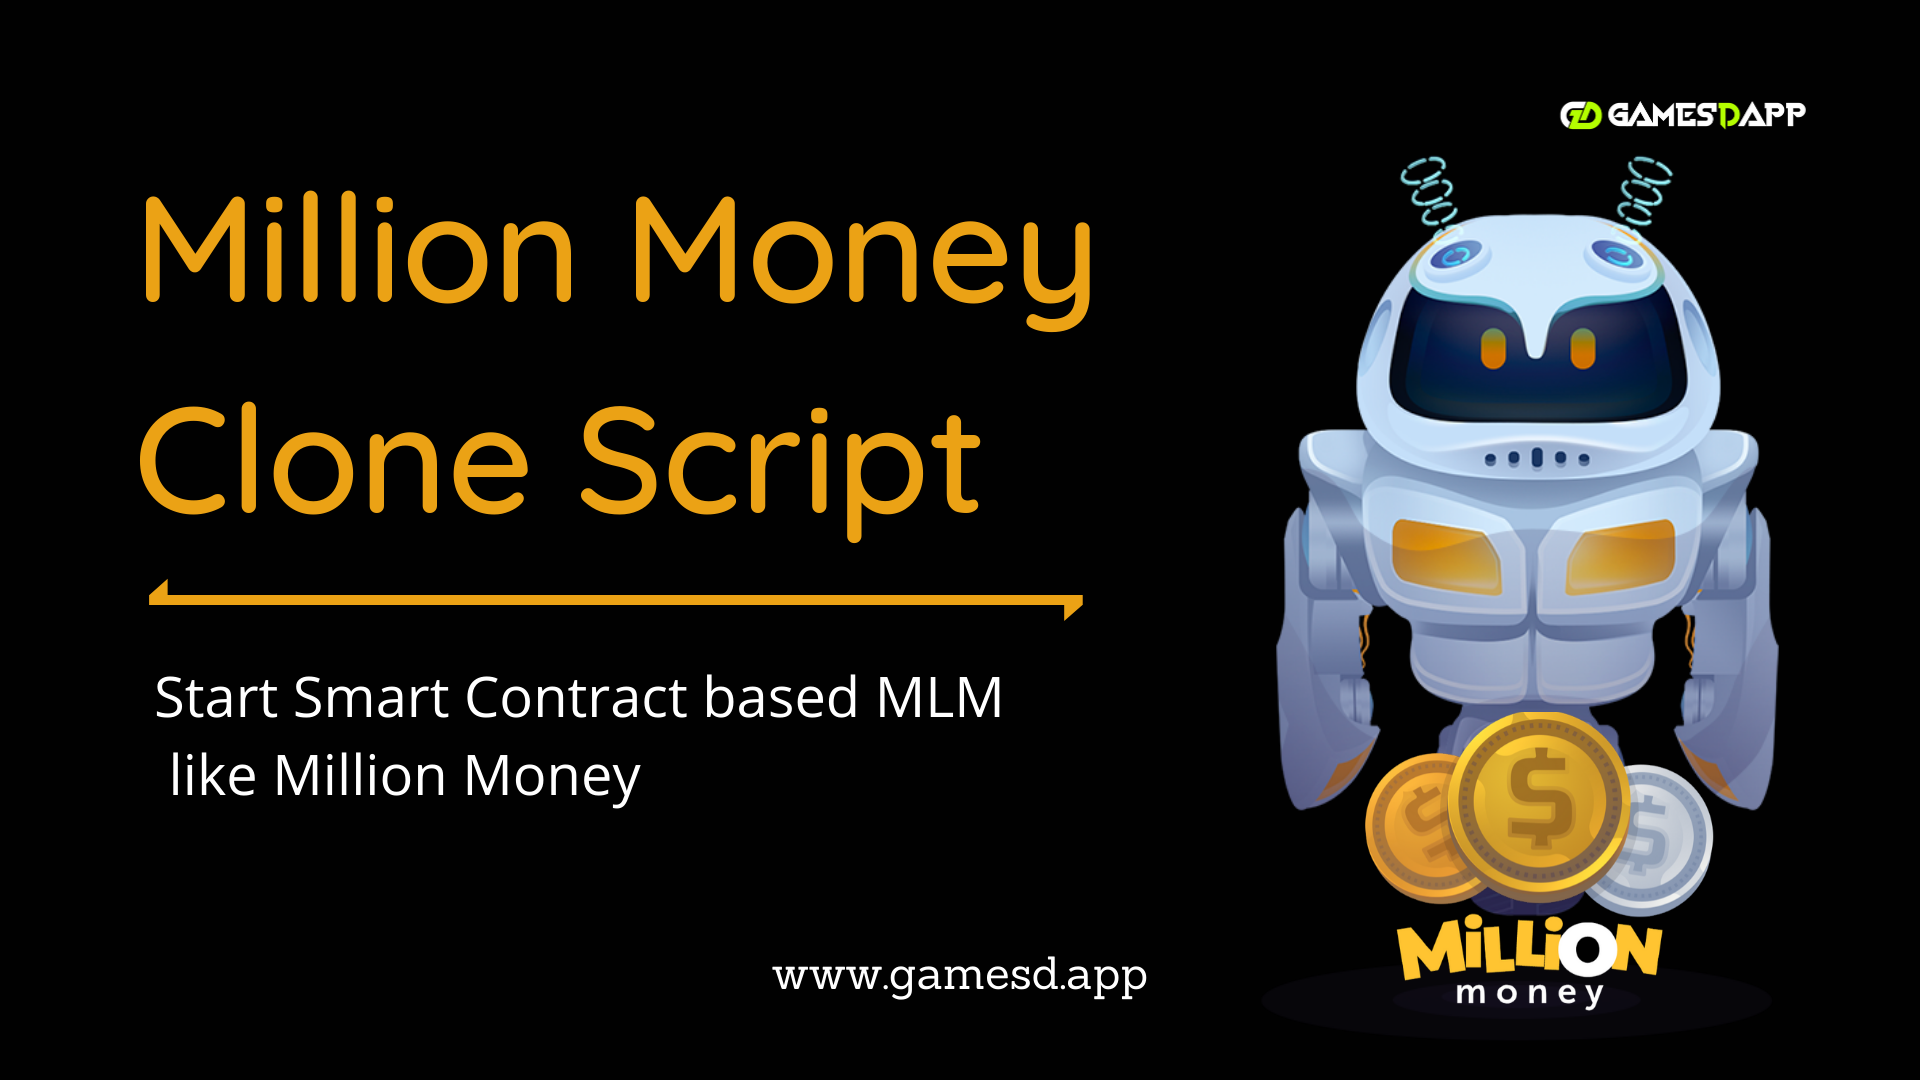 Million Money Clone Script - To Start Smart Contract Based MLM Like Million Money